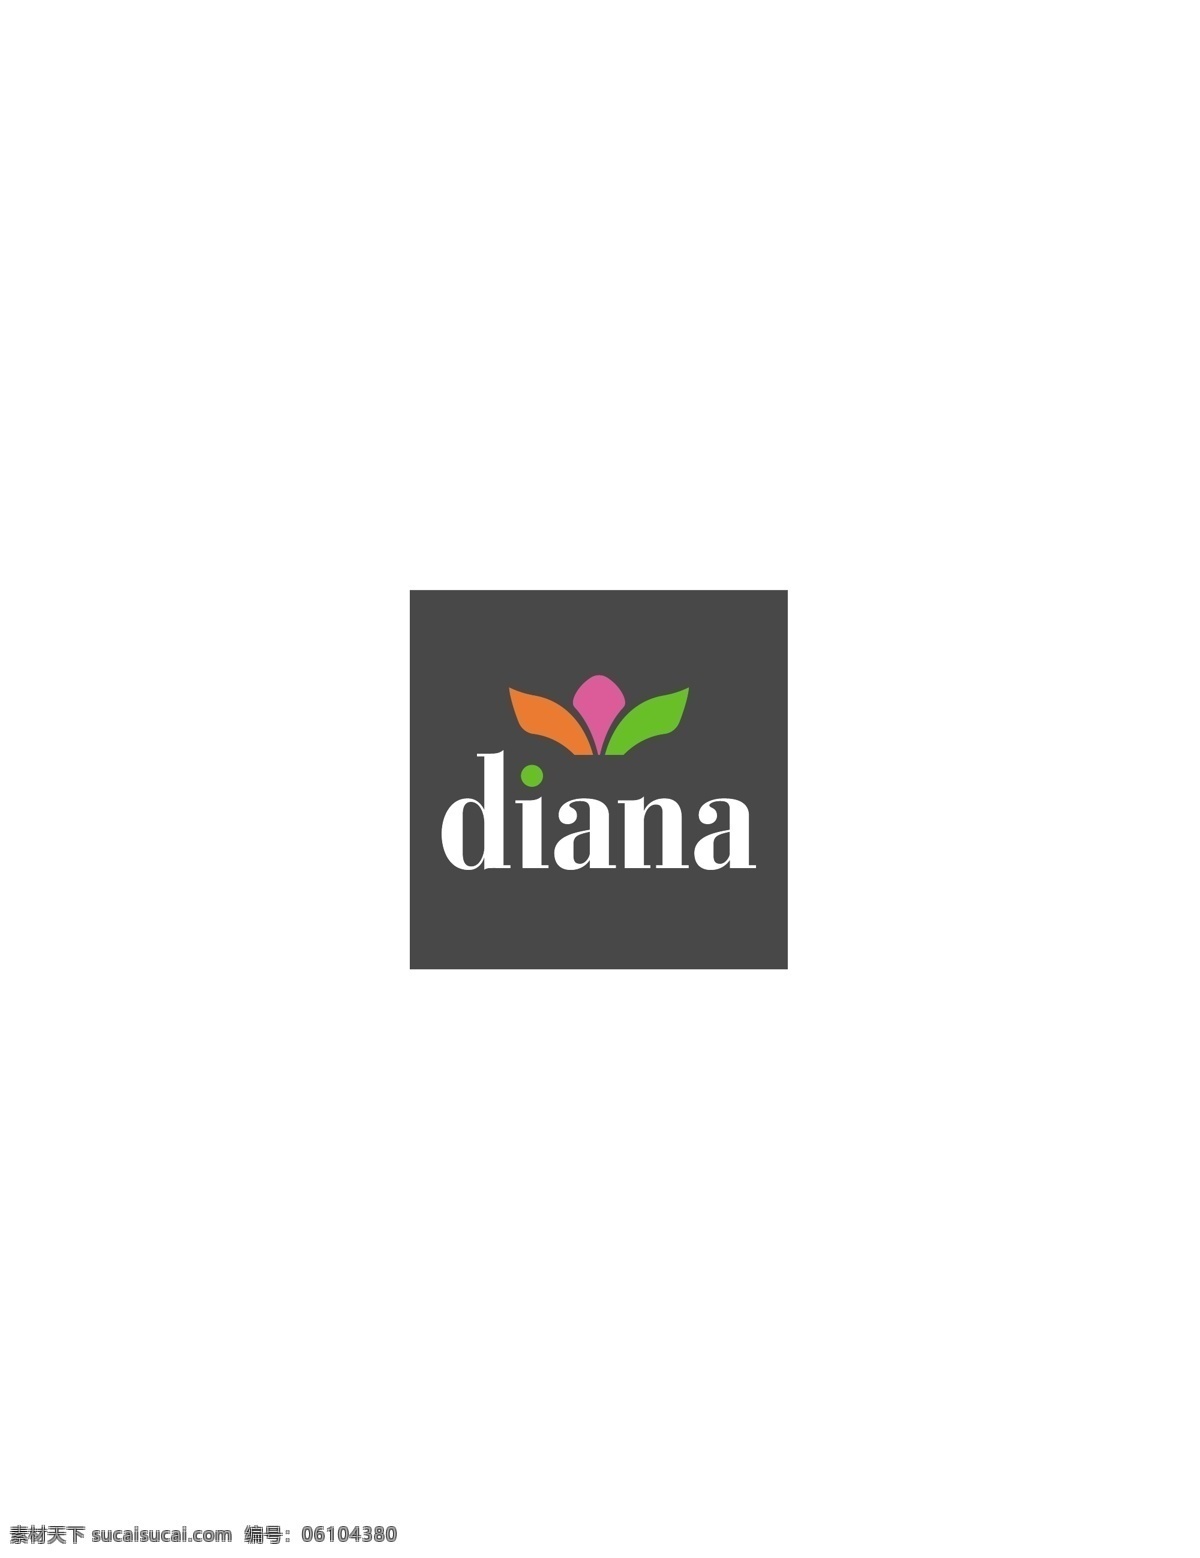 diana logo大全 logo 设计欣赏 商业矢量 矢量下载 服饰 品牌 标志 标志设计 欣赏 网页矢量 矢量图 其他矢量图